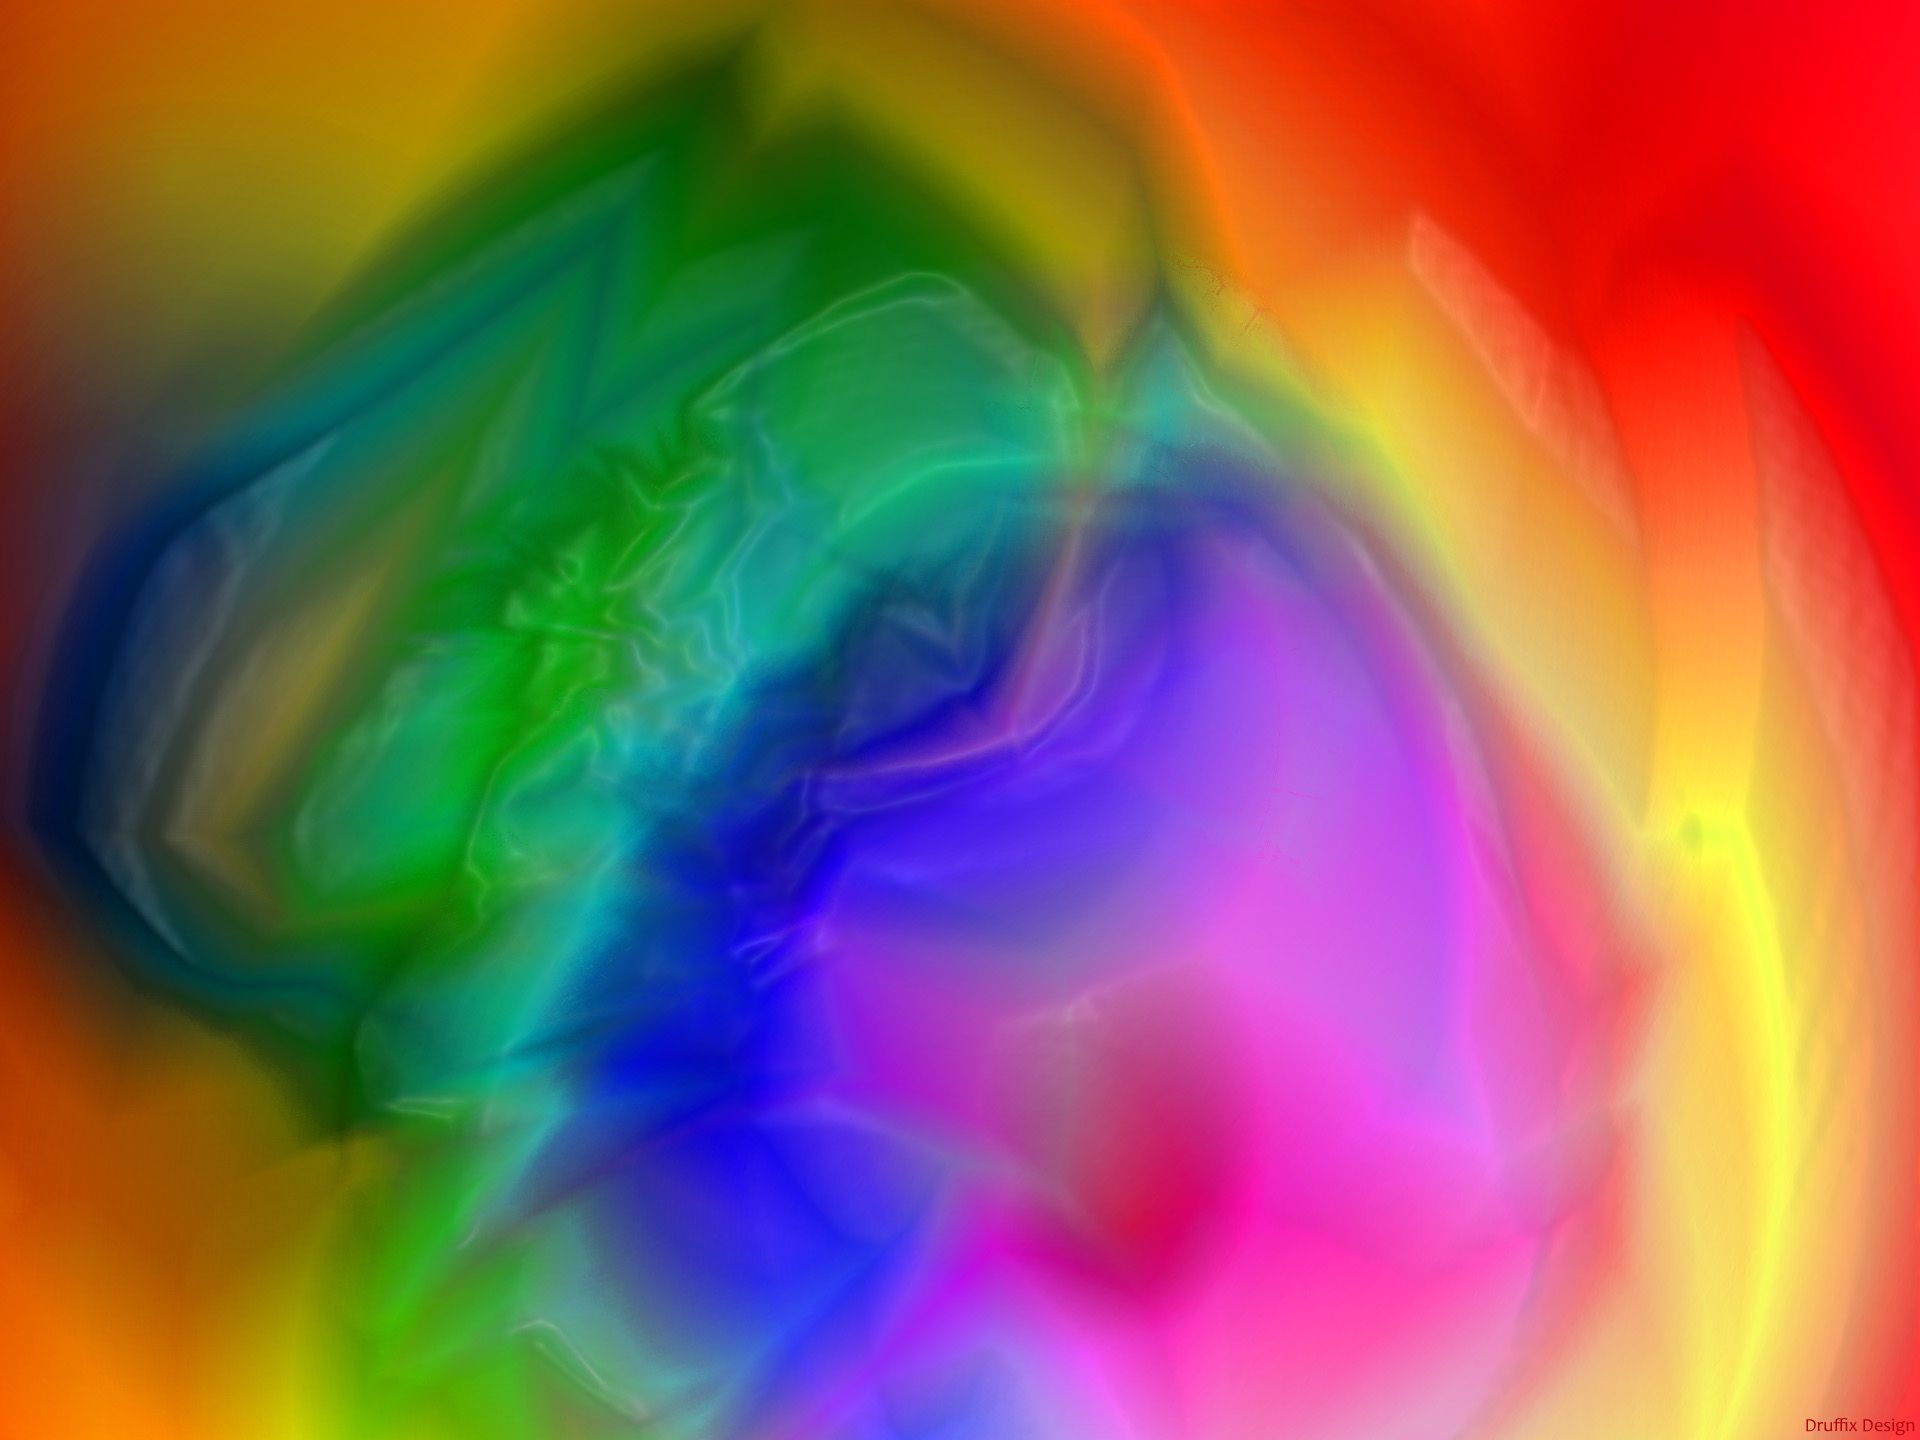 Abstract Rainbow Wallpapers Free Mekamak | HD Wallpapers | Pinterest ...